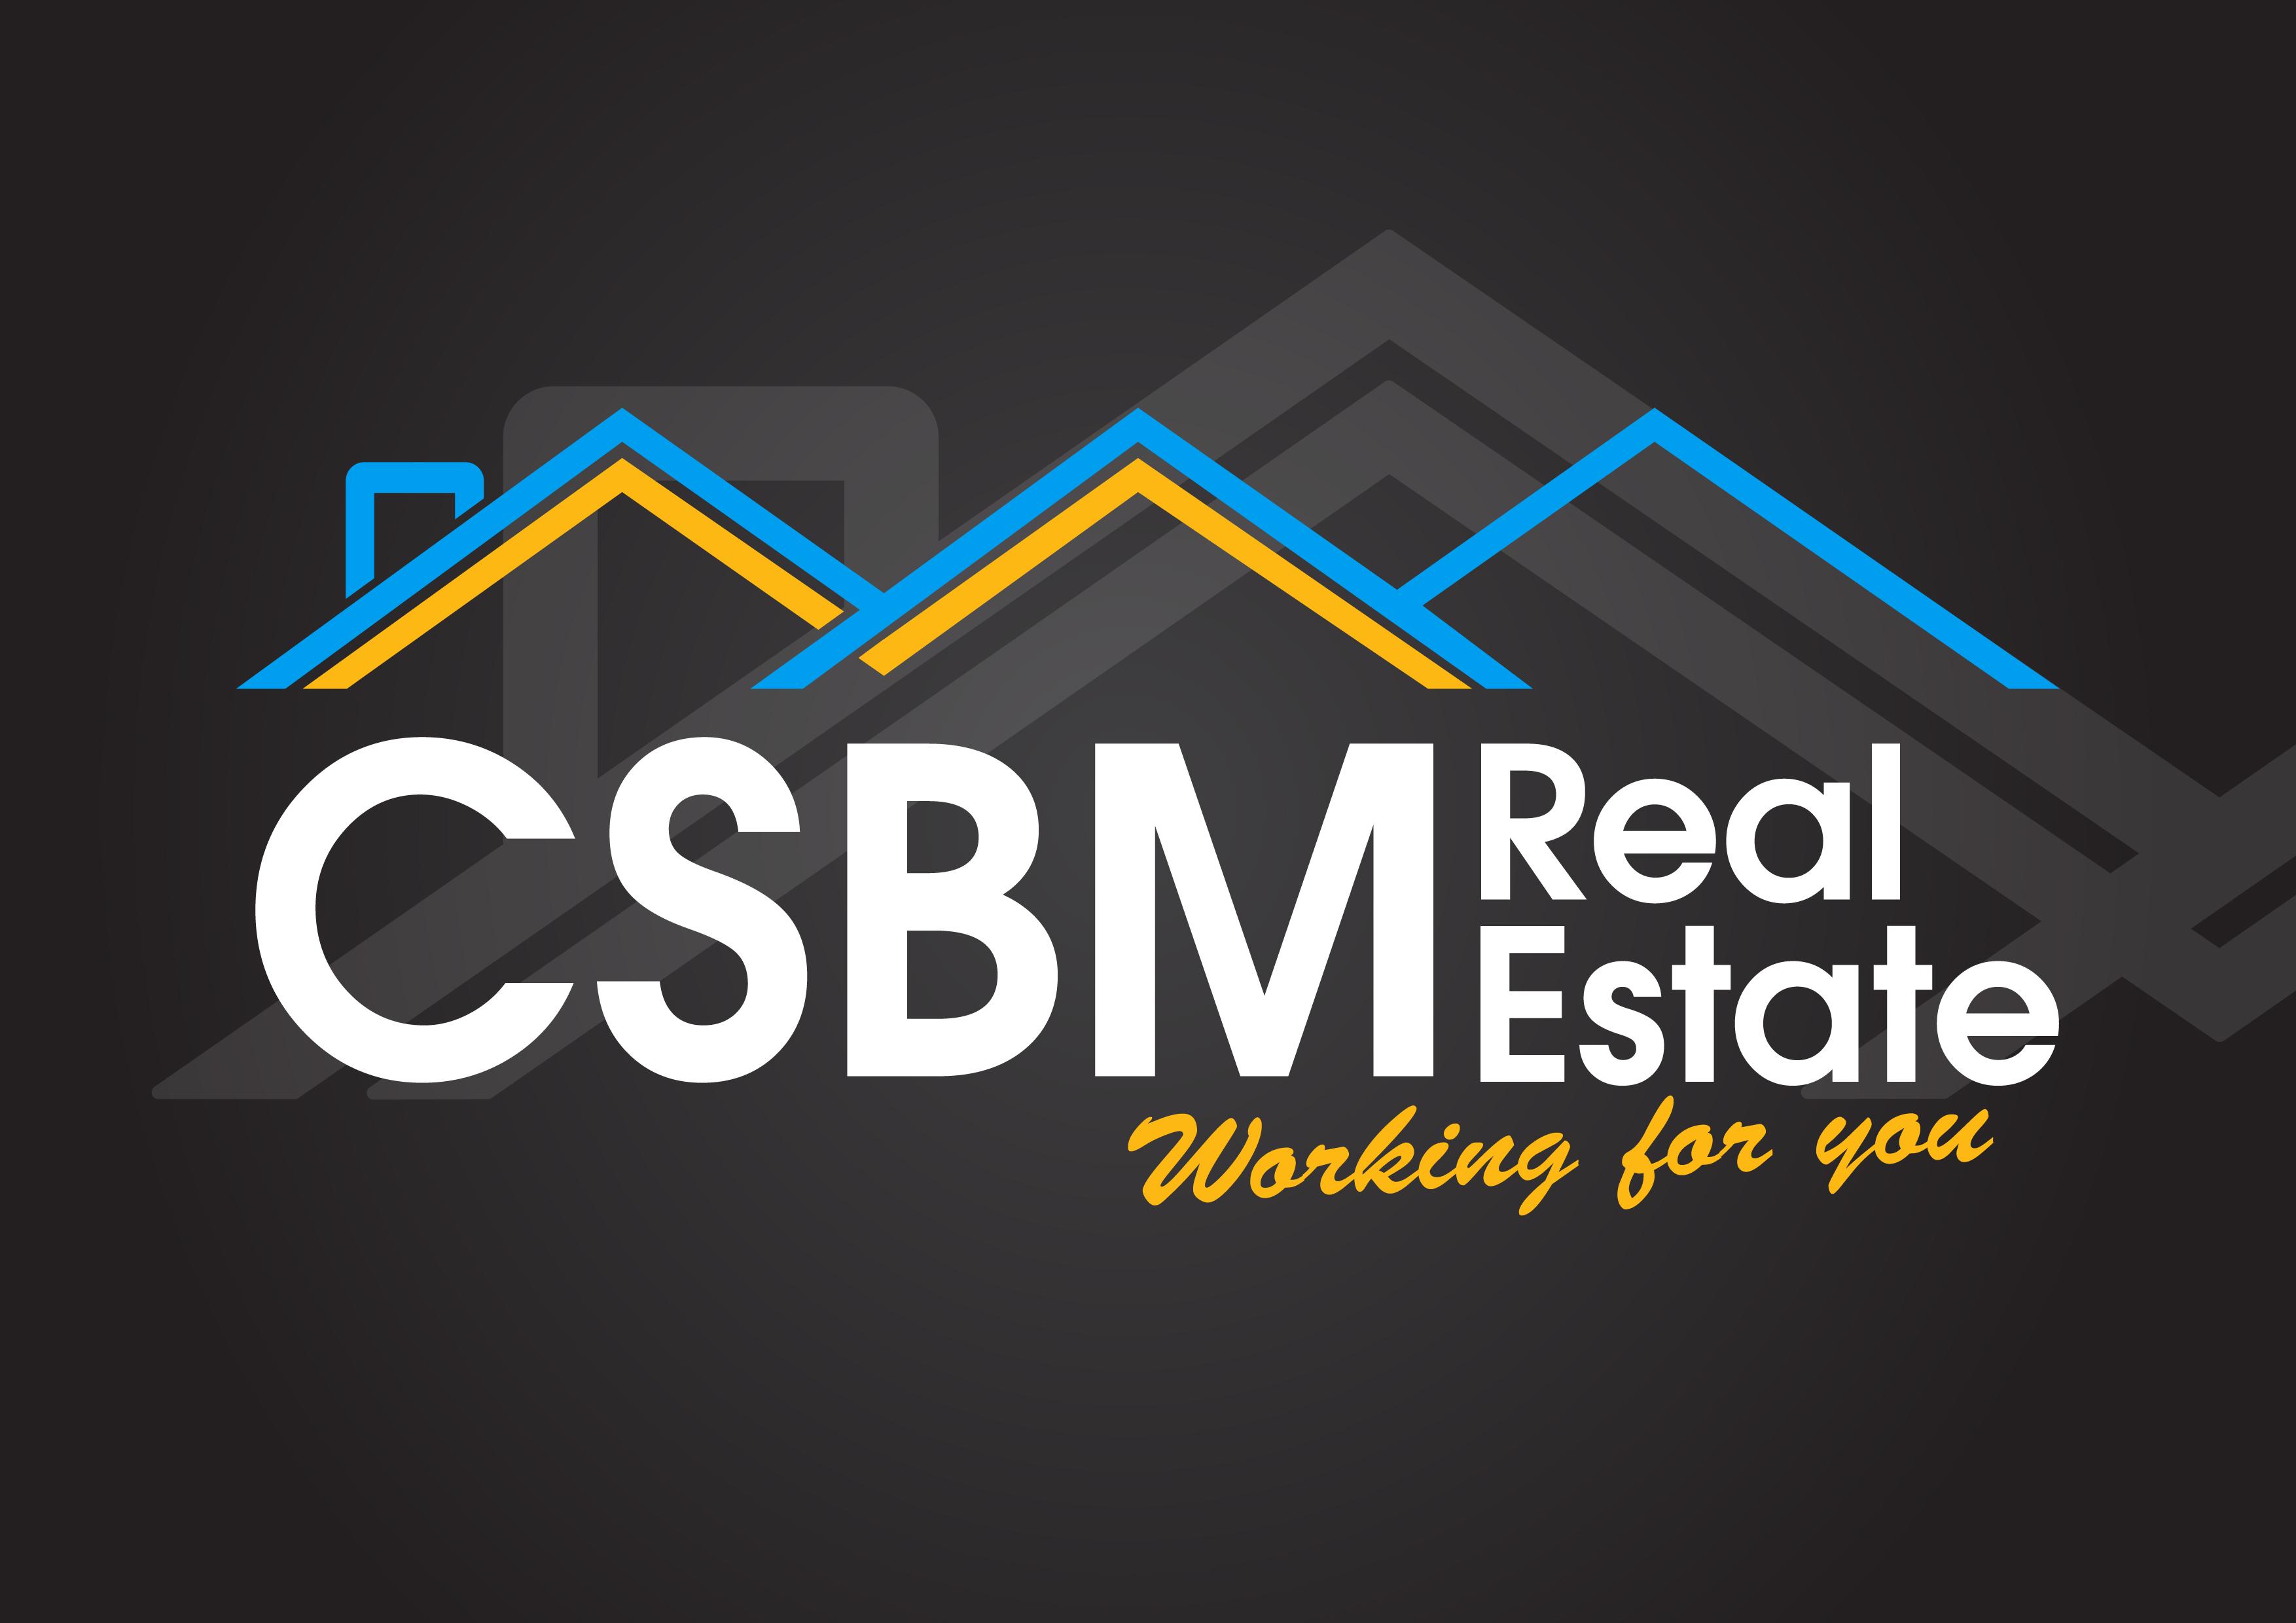 CSBM Real Estate